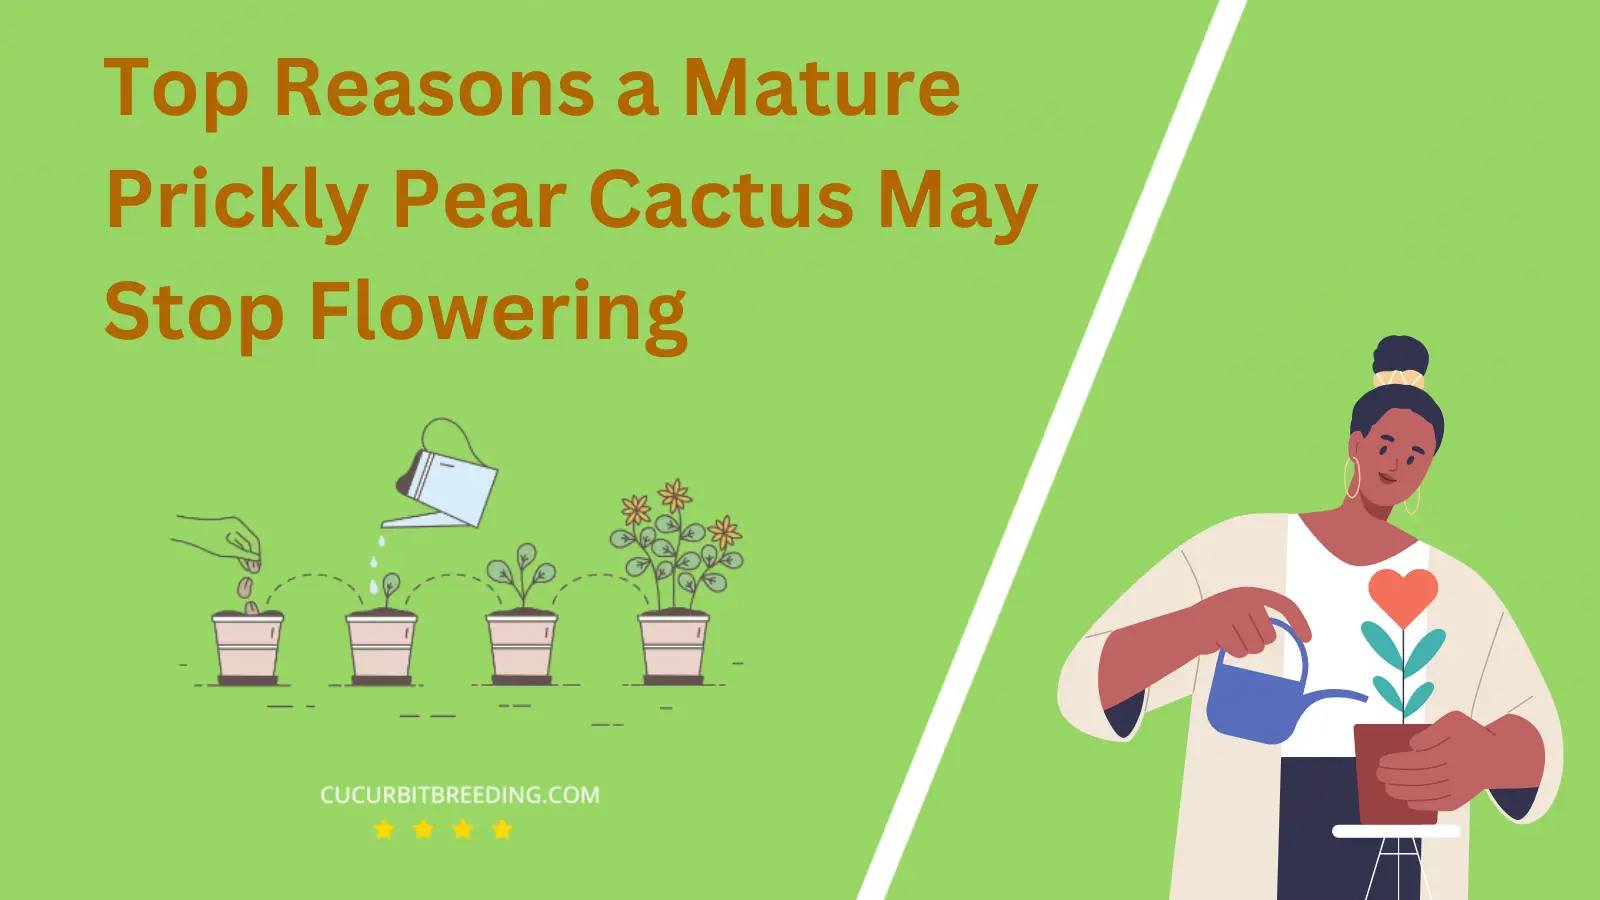 Top Reasons a Mature Prickly Pear Cactus May Stop Flowering